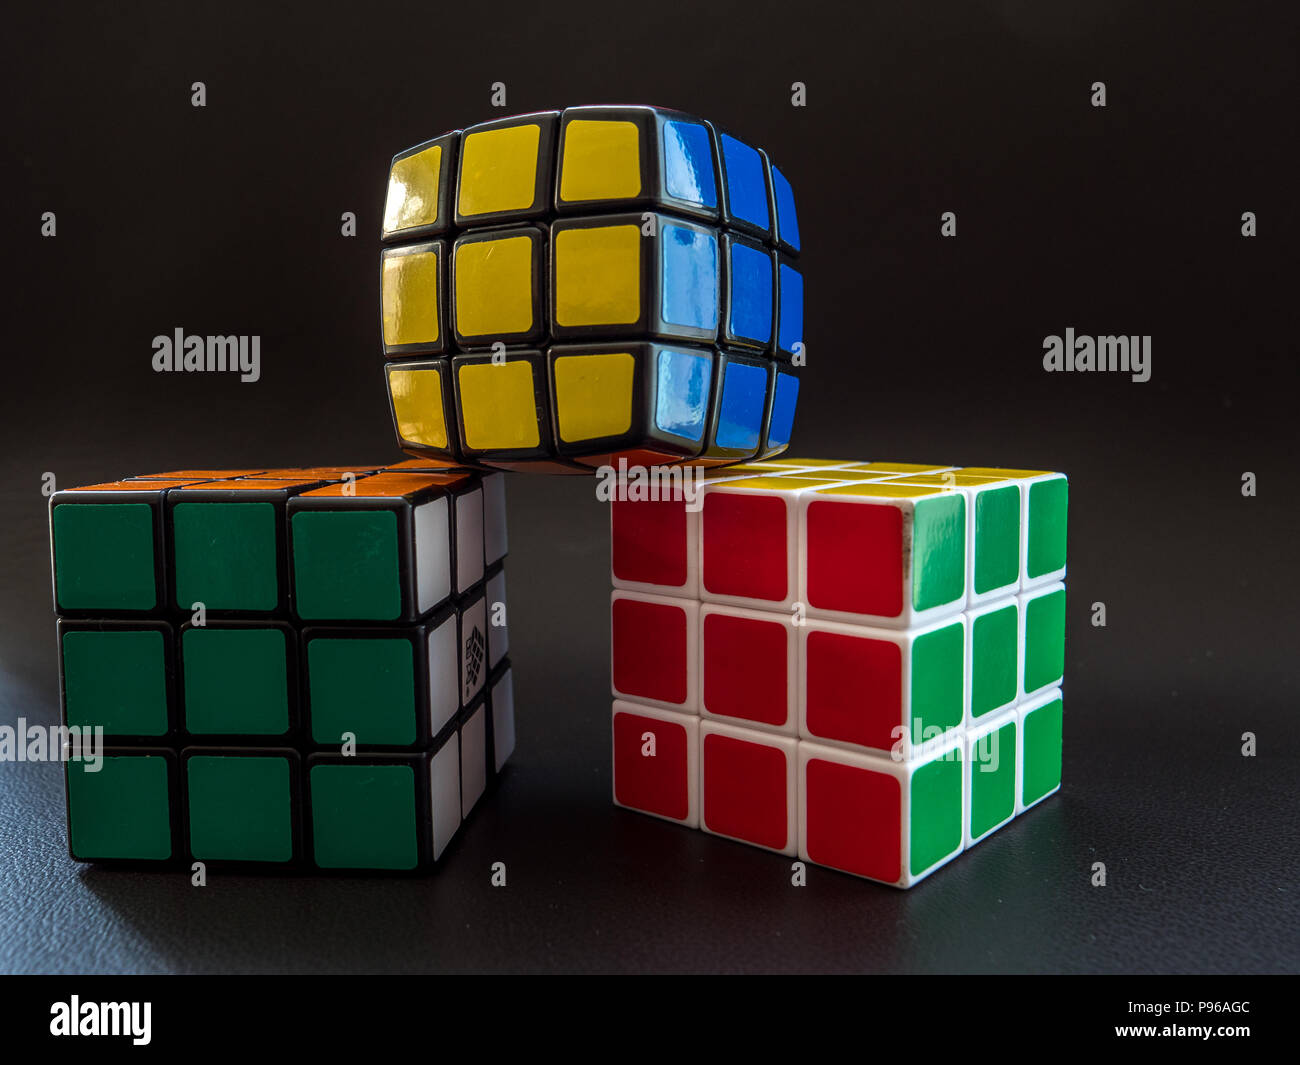 different types of rubik's cube white black and round on black background studio light Stock Photo